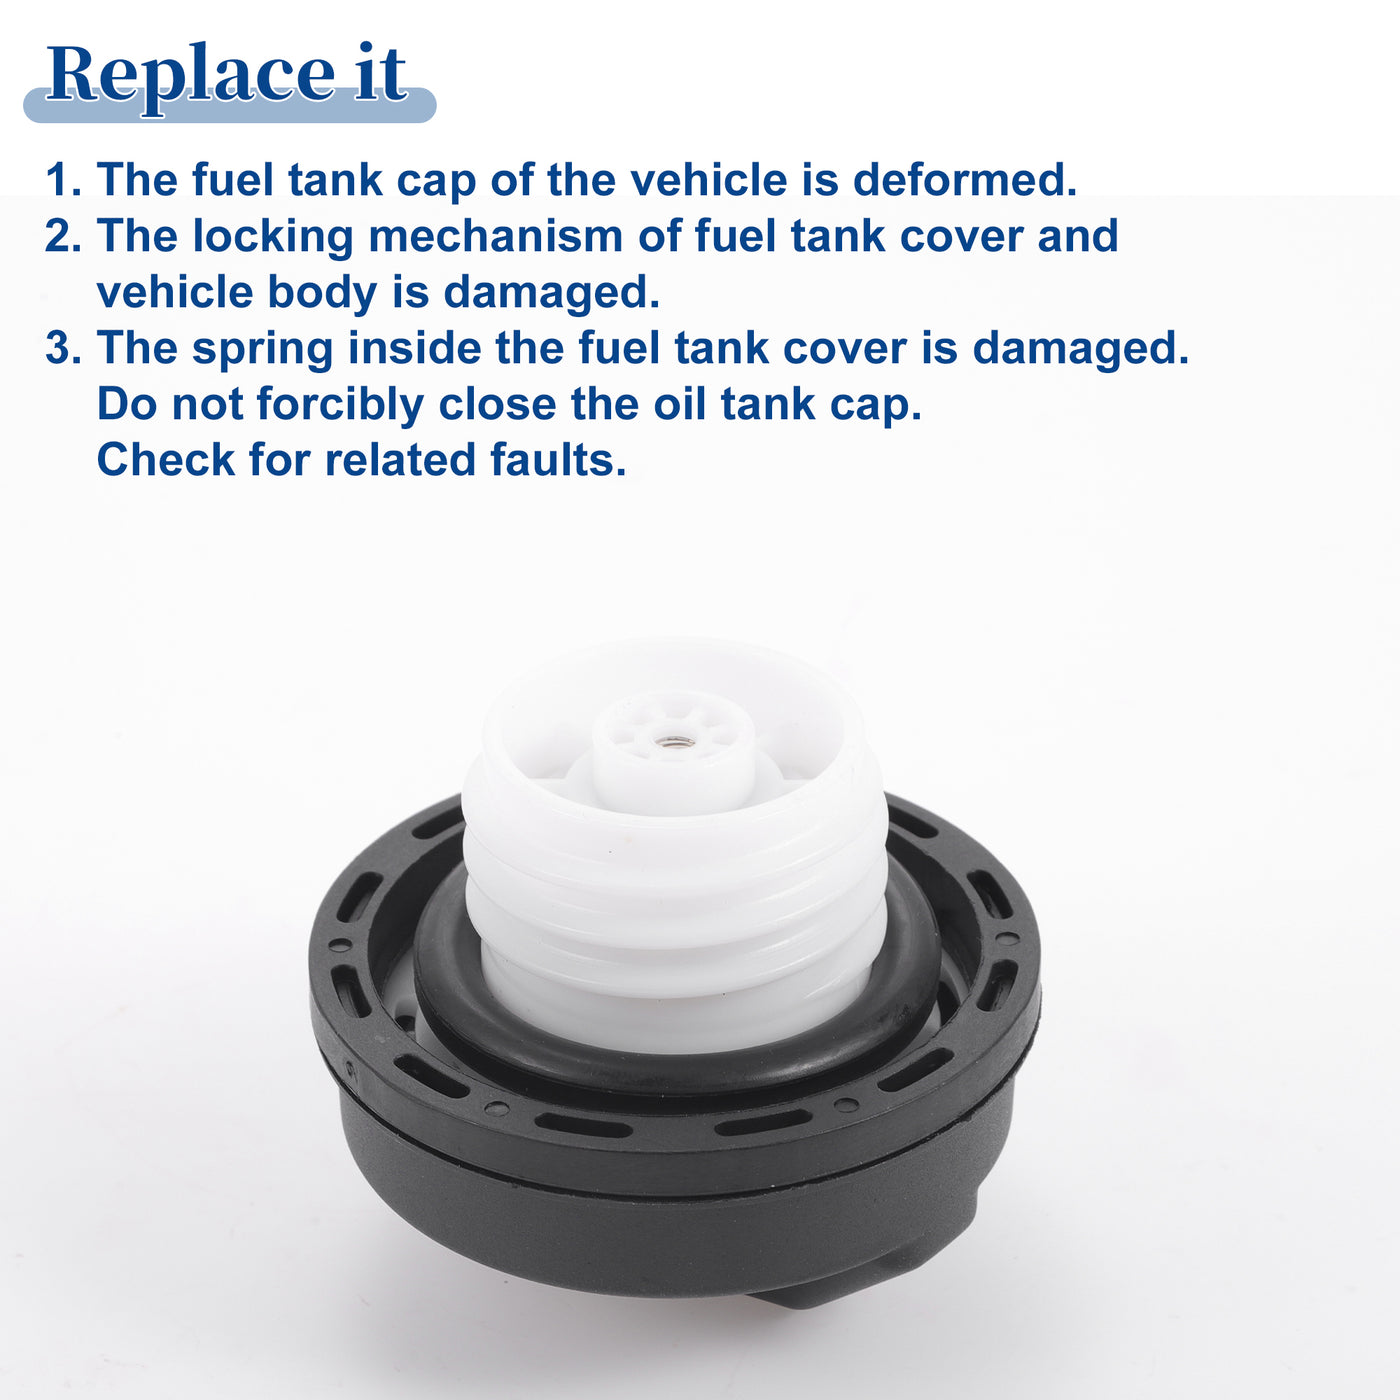 ACROPIX Plastic Locking Gas Cap Lock Fuel Tank Cap Black Fit for Toyota Camry Prius with Keys No.7D0201551 - Pack of 3